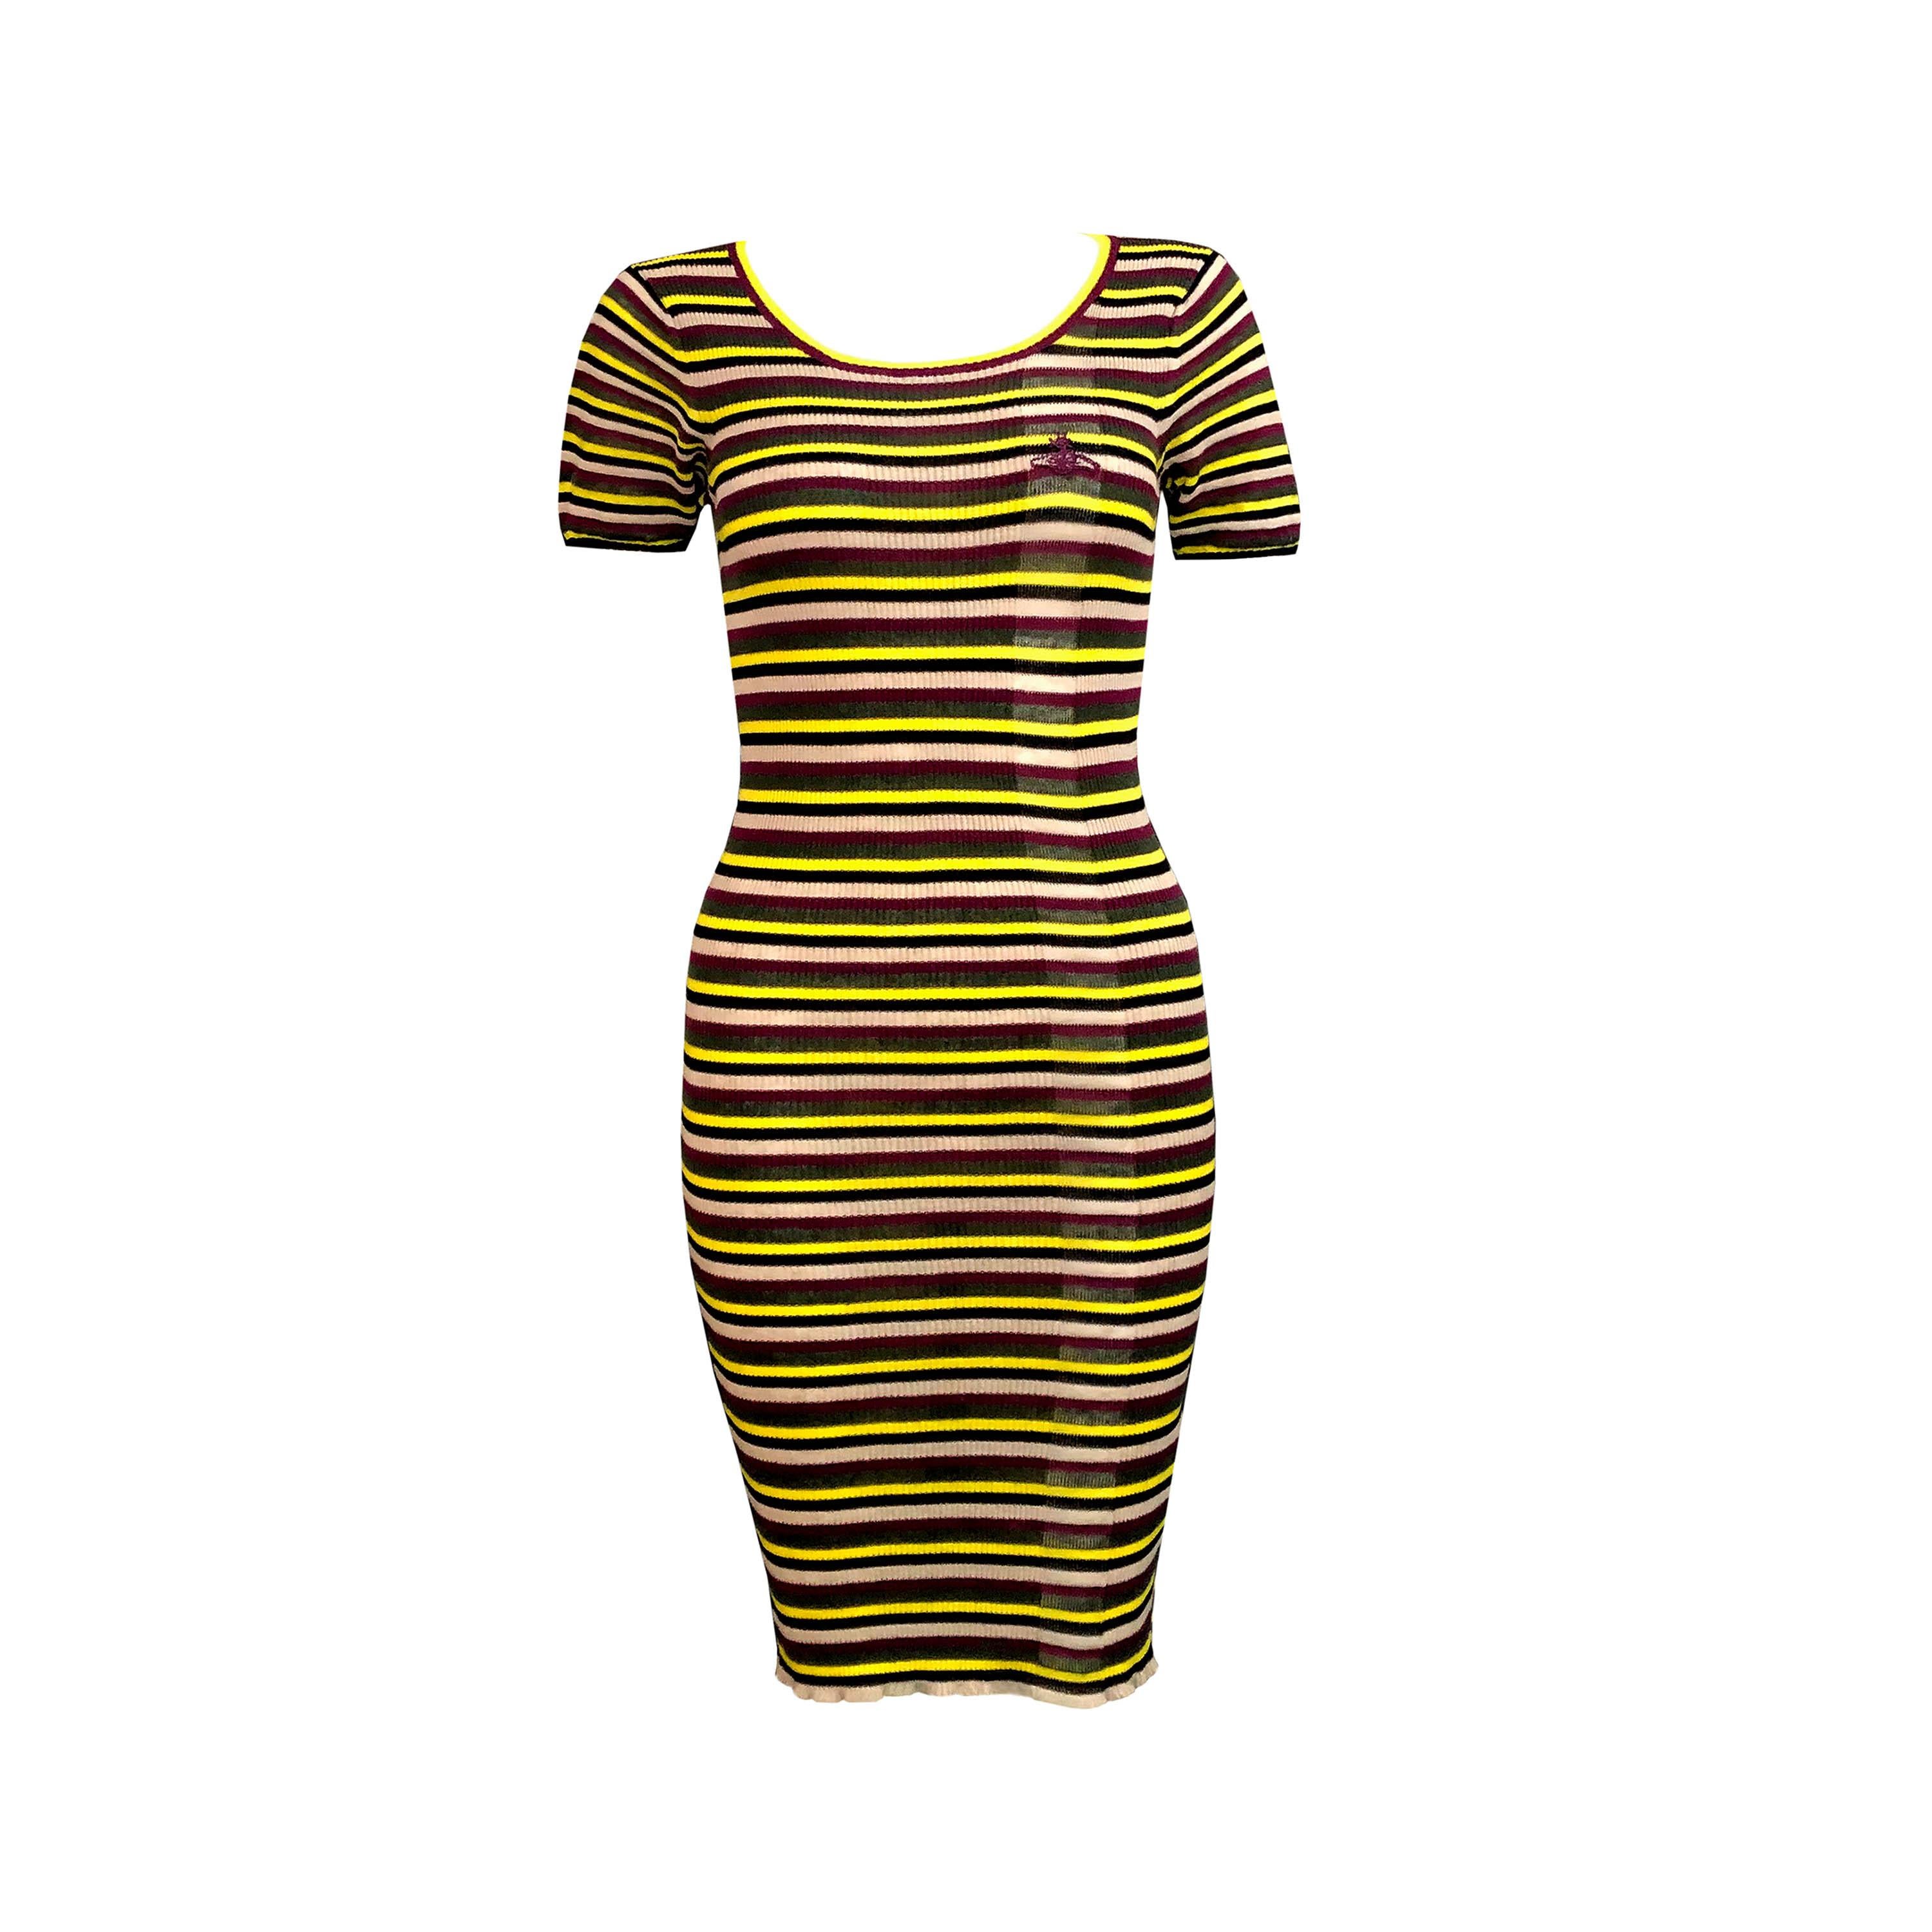 Vivienne Westwood Dress - Multi Striped Stretch Knit  For Sale 1